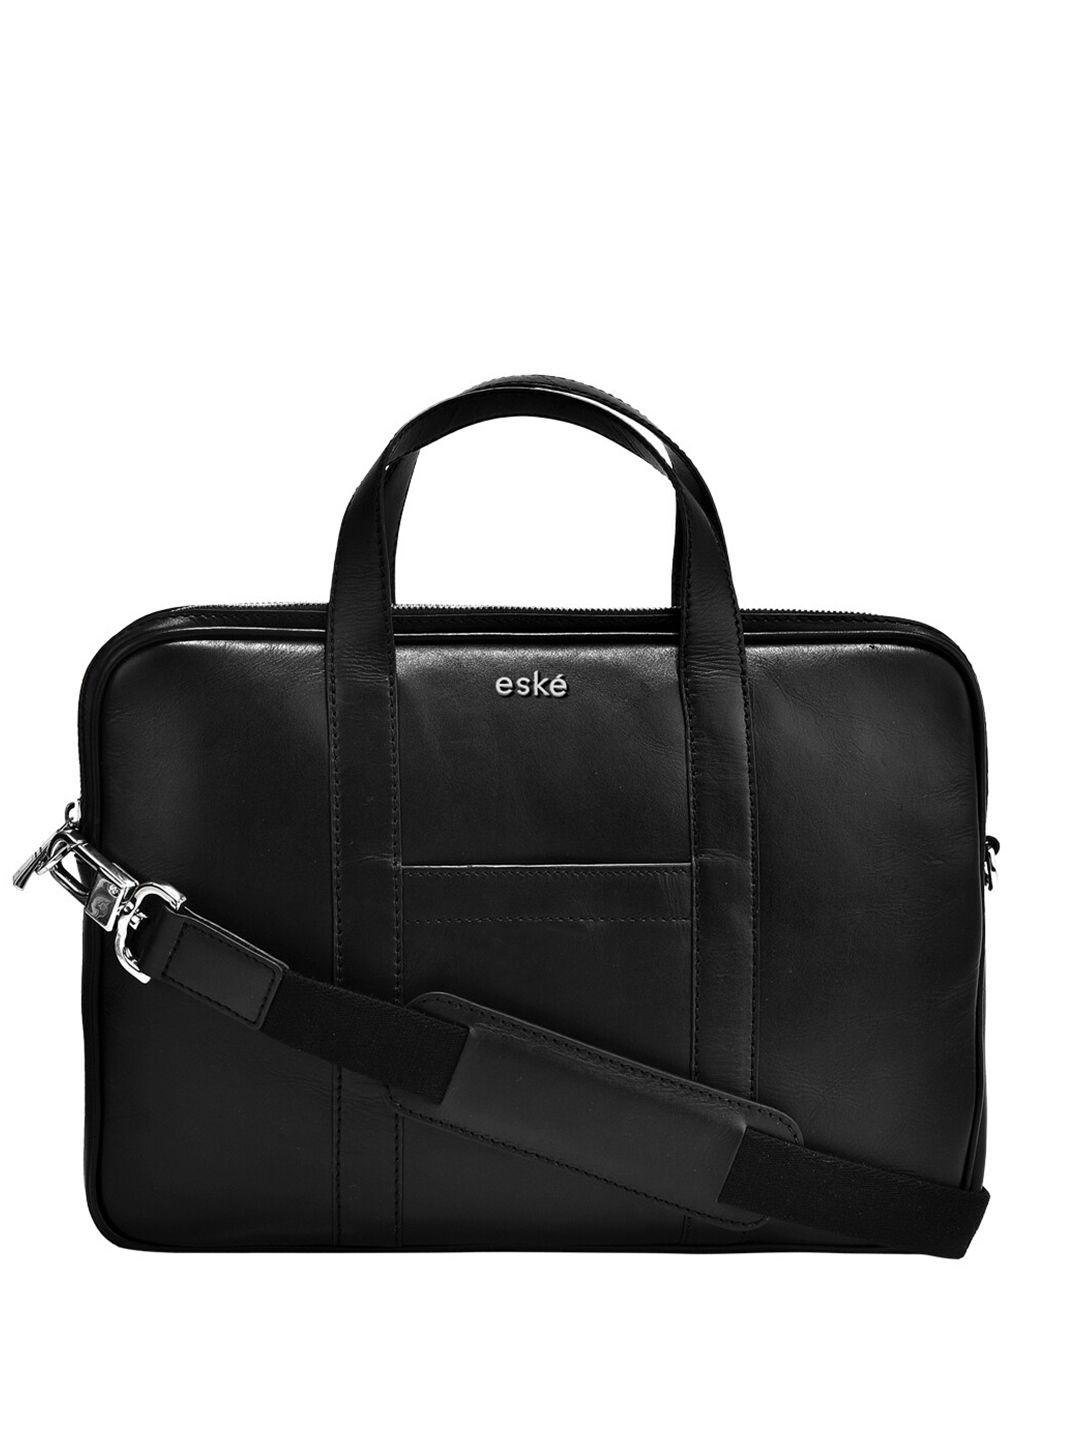 eske unisex leather laptop bag